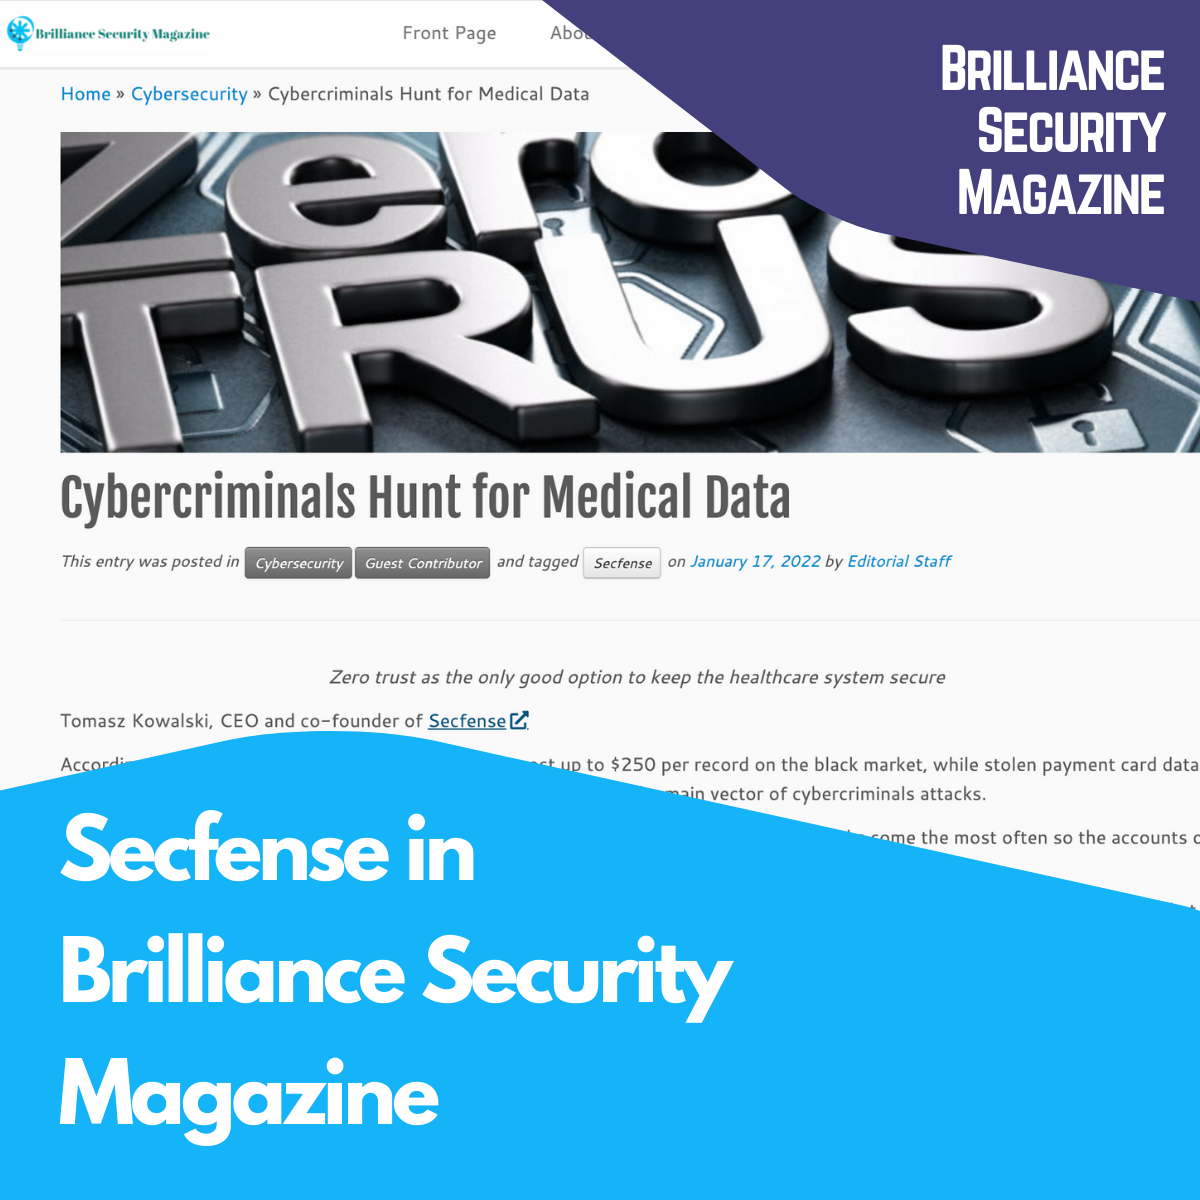 Secfense in Brilliance Security Magazine